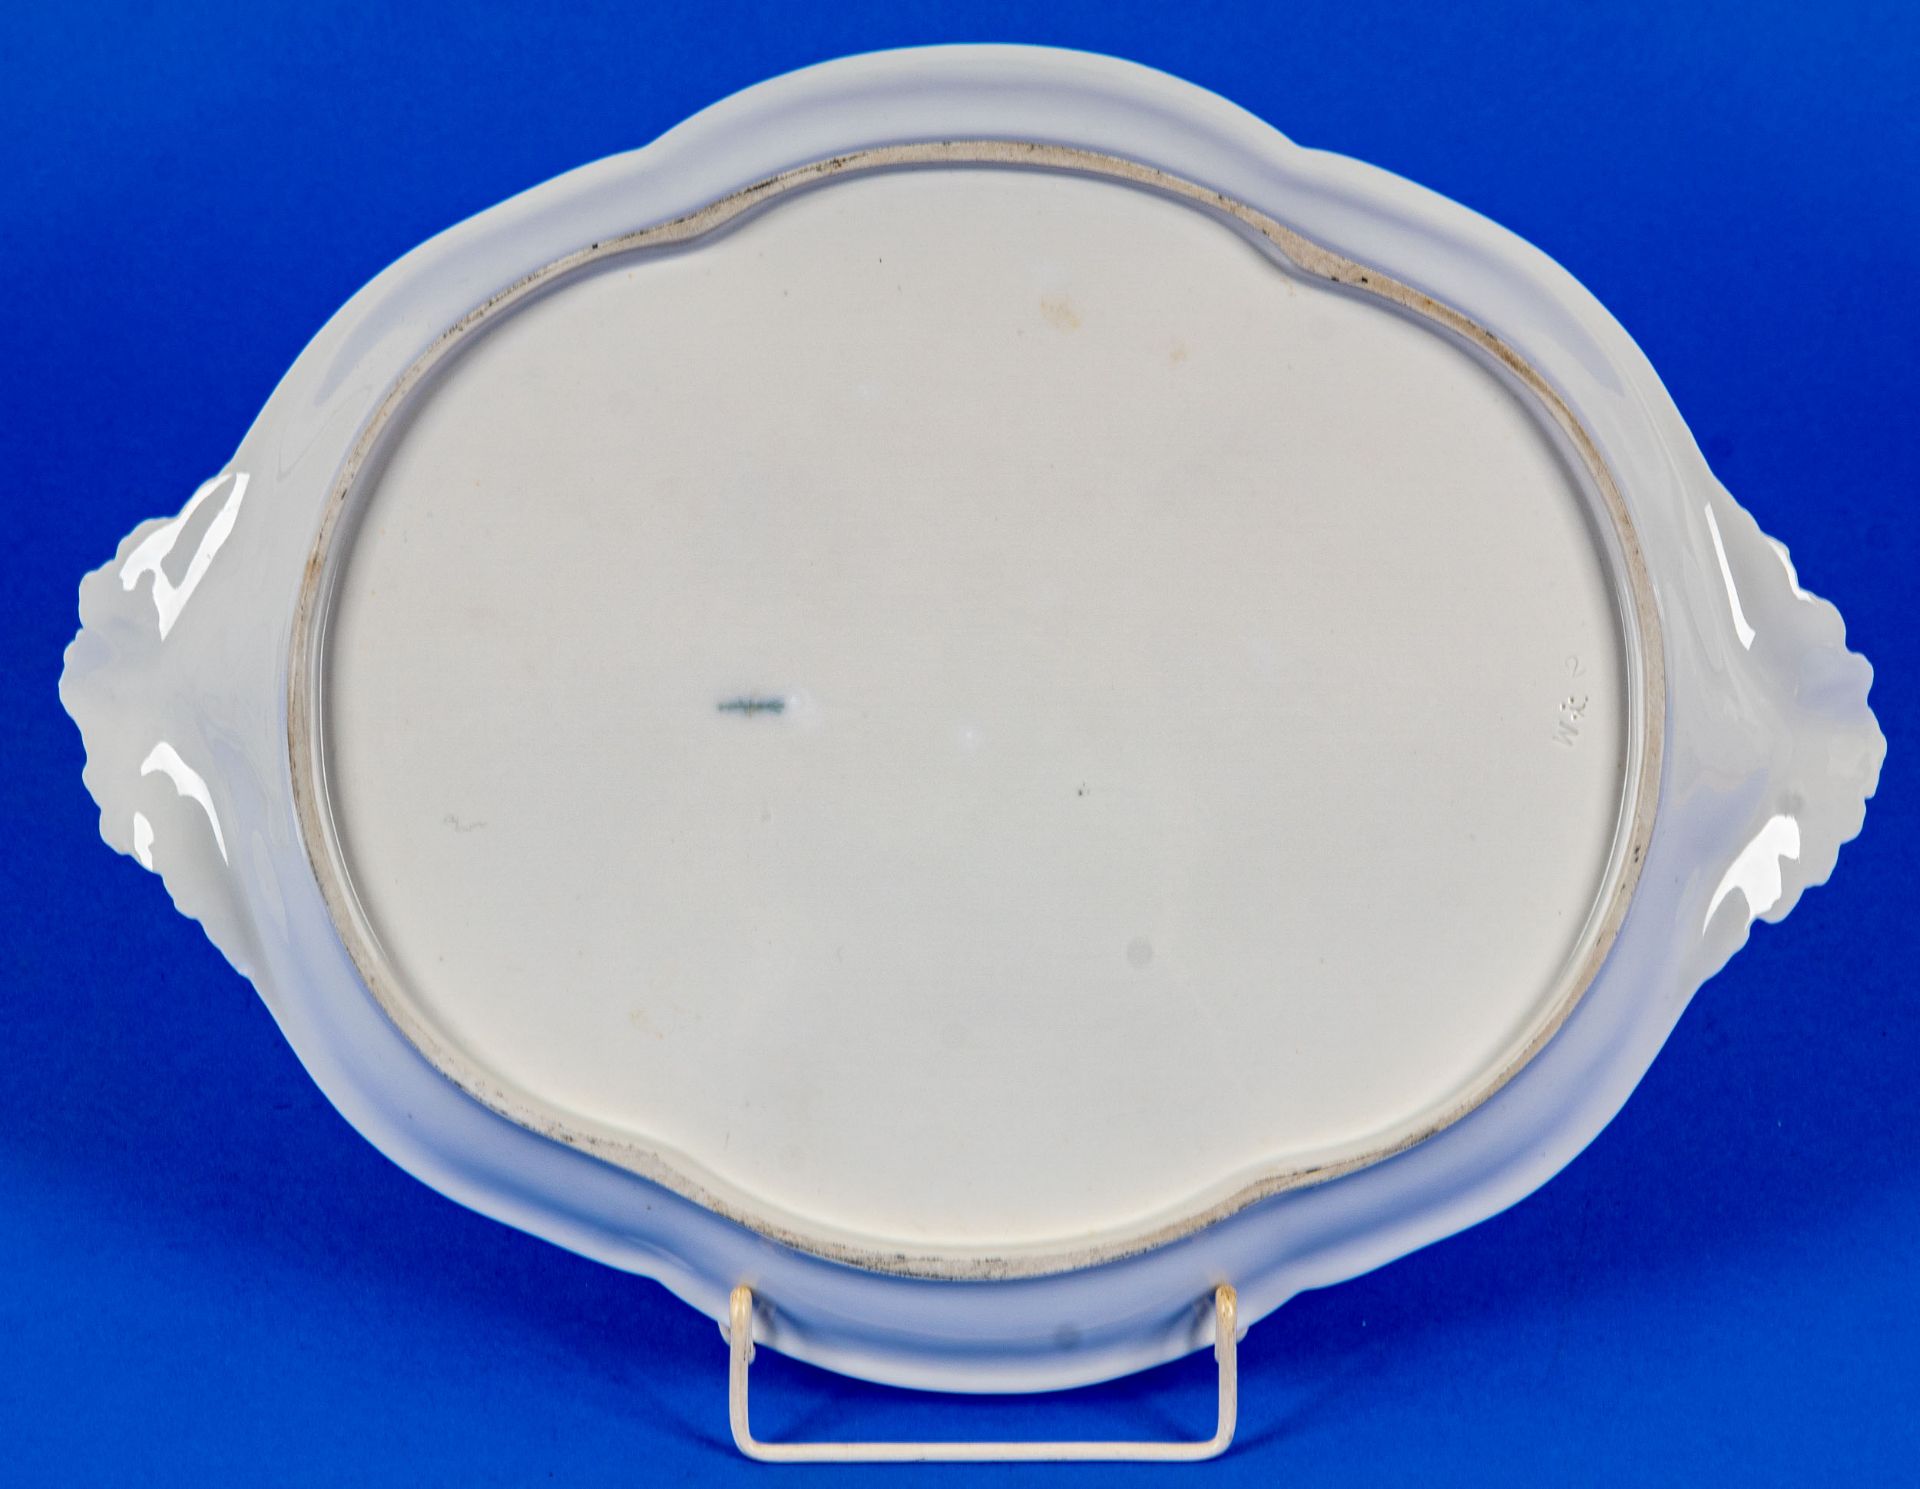 Ovales Tablett der KPM-Berlin, wohl um 1900, Weißporzellan in Rokoko-Formgebung, stirnseitig hochge - Image 5 of 8